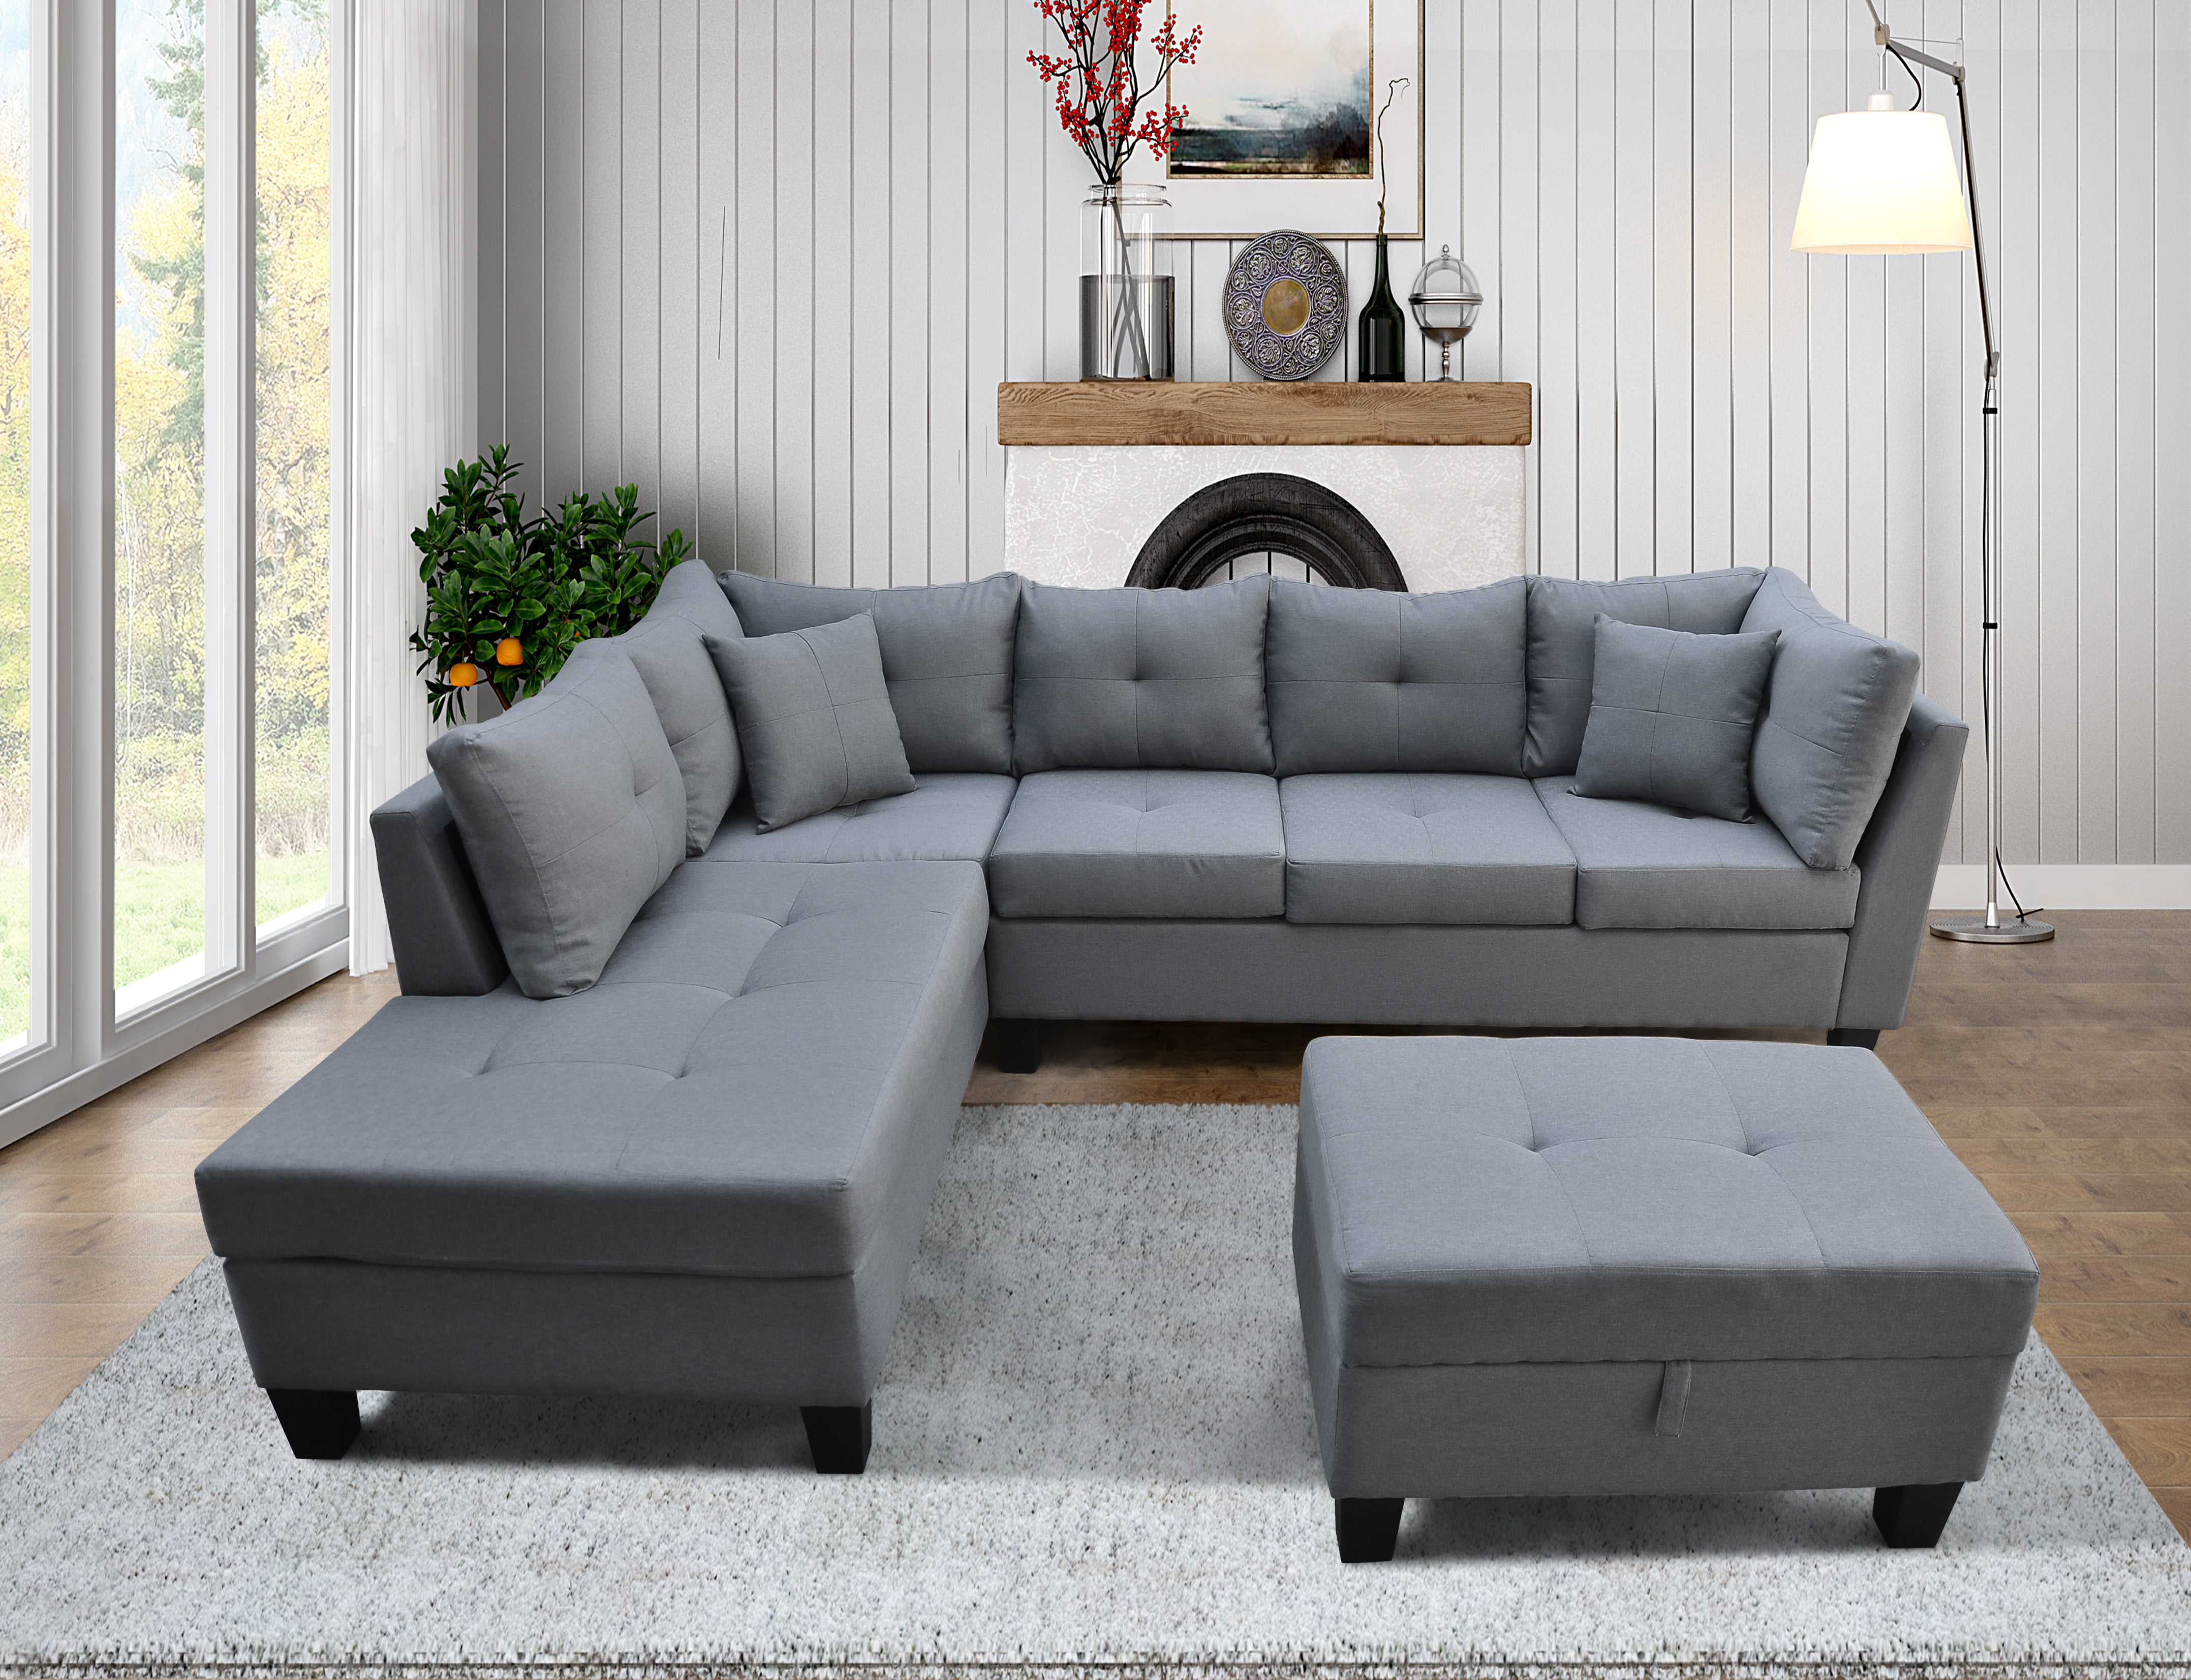 CLEARANCE! 3-piece Grey Soft Microfiber Sofa Sets with Storage Ottoman